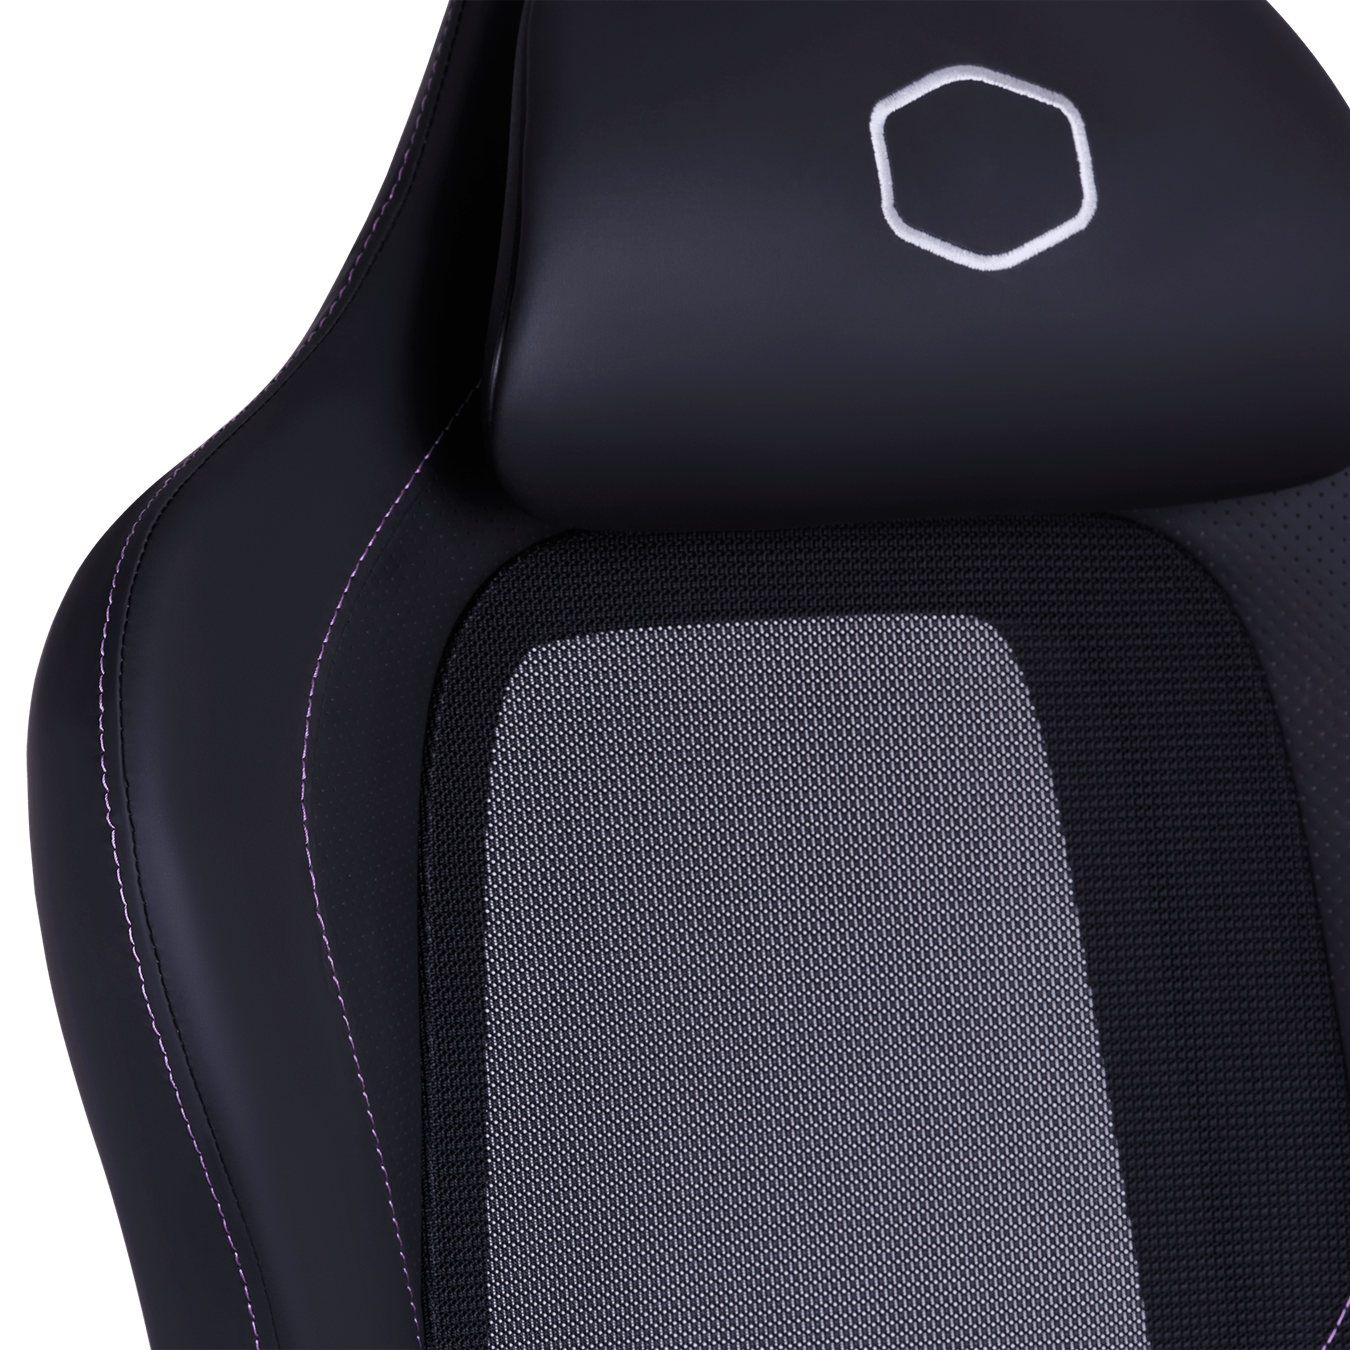 Hybrid 1 Ergo-Gaming Chair - Close Up - Cheek